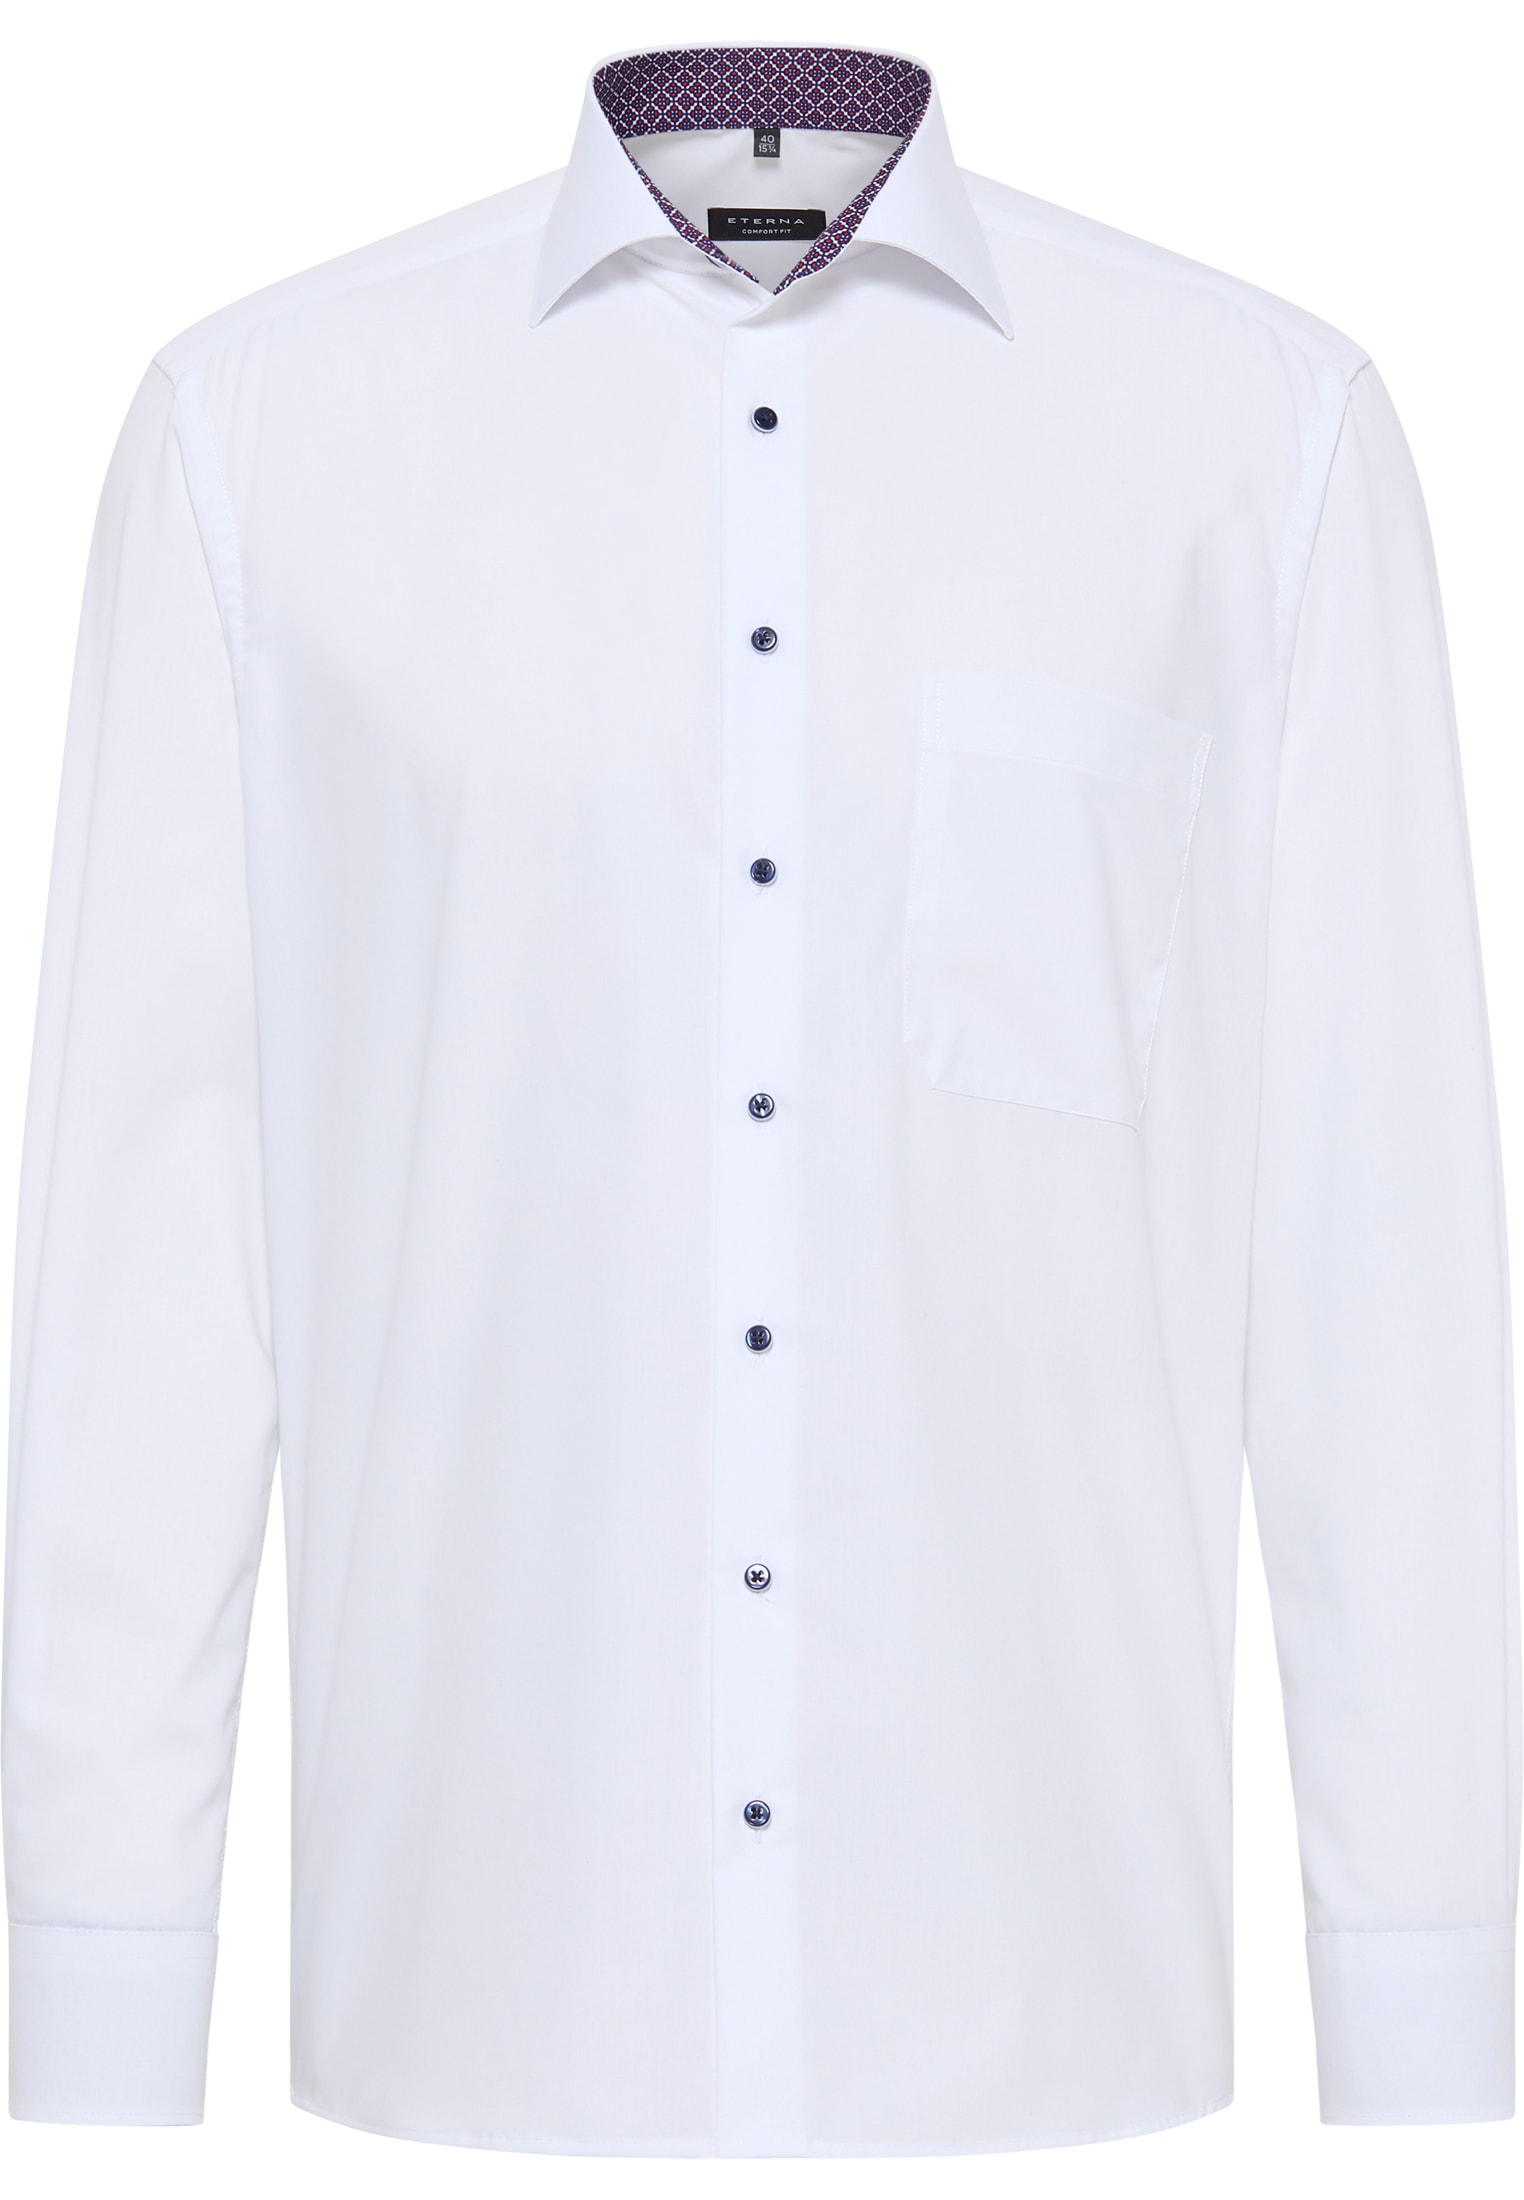 | | long | | Shirt plain white white 46 Original 1SH11720-00-01-46-1/1 in FIT sleeve COMFORT